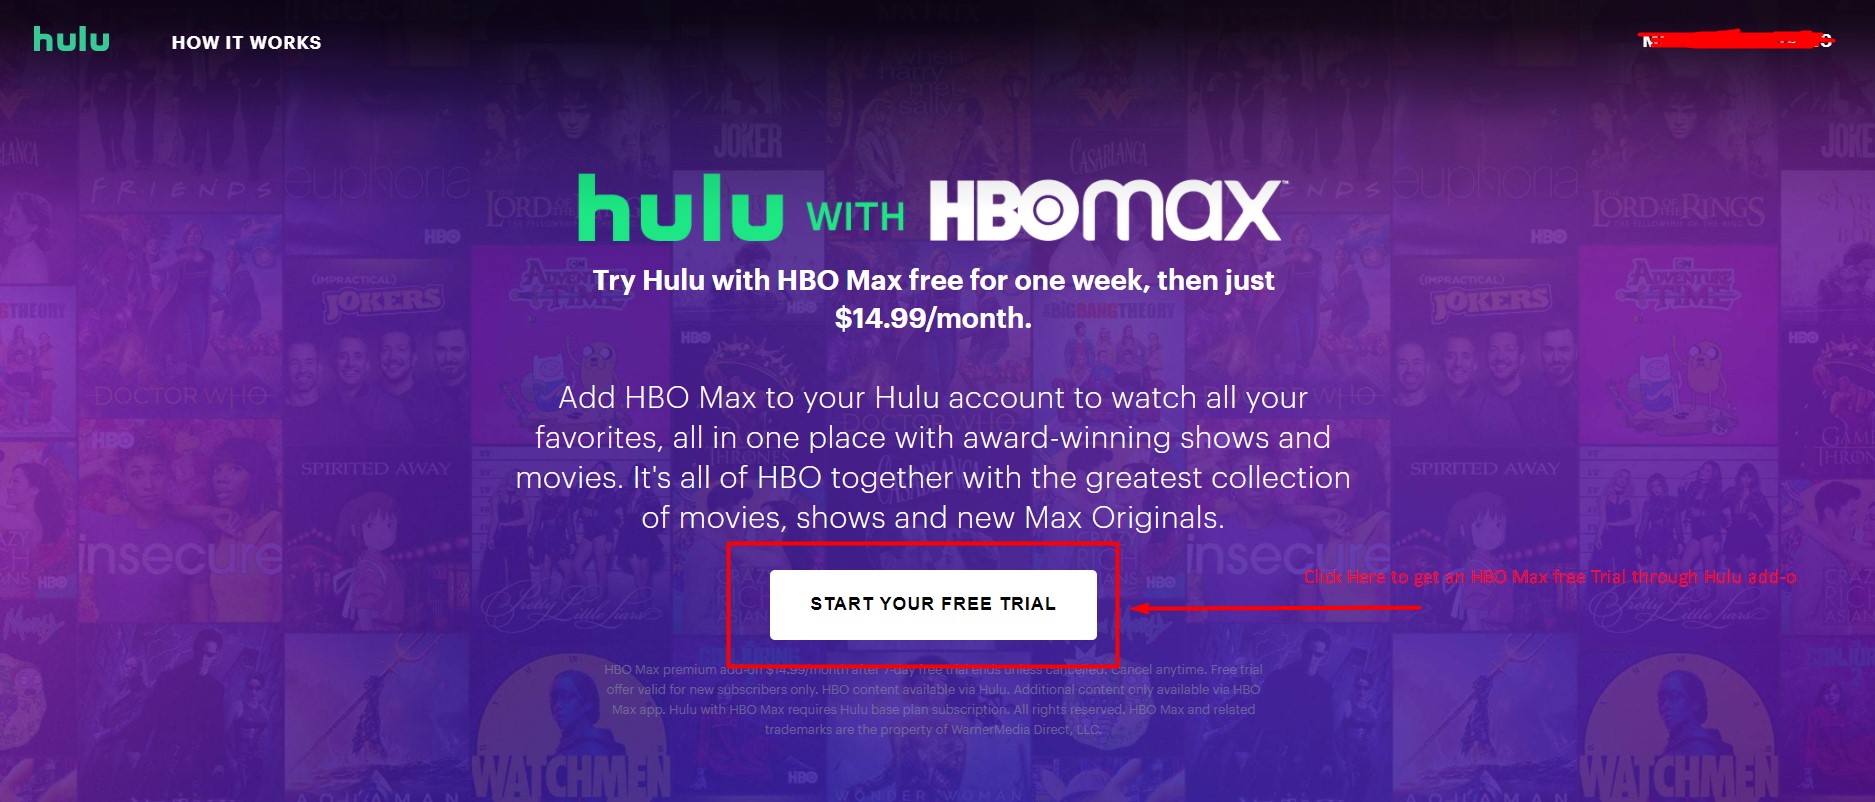 HBO-Max-free-trial-via-Hulu-add-on